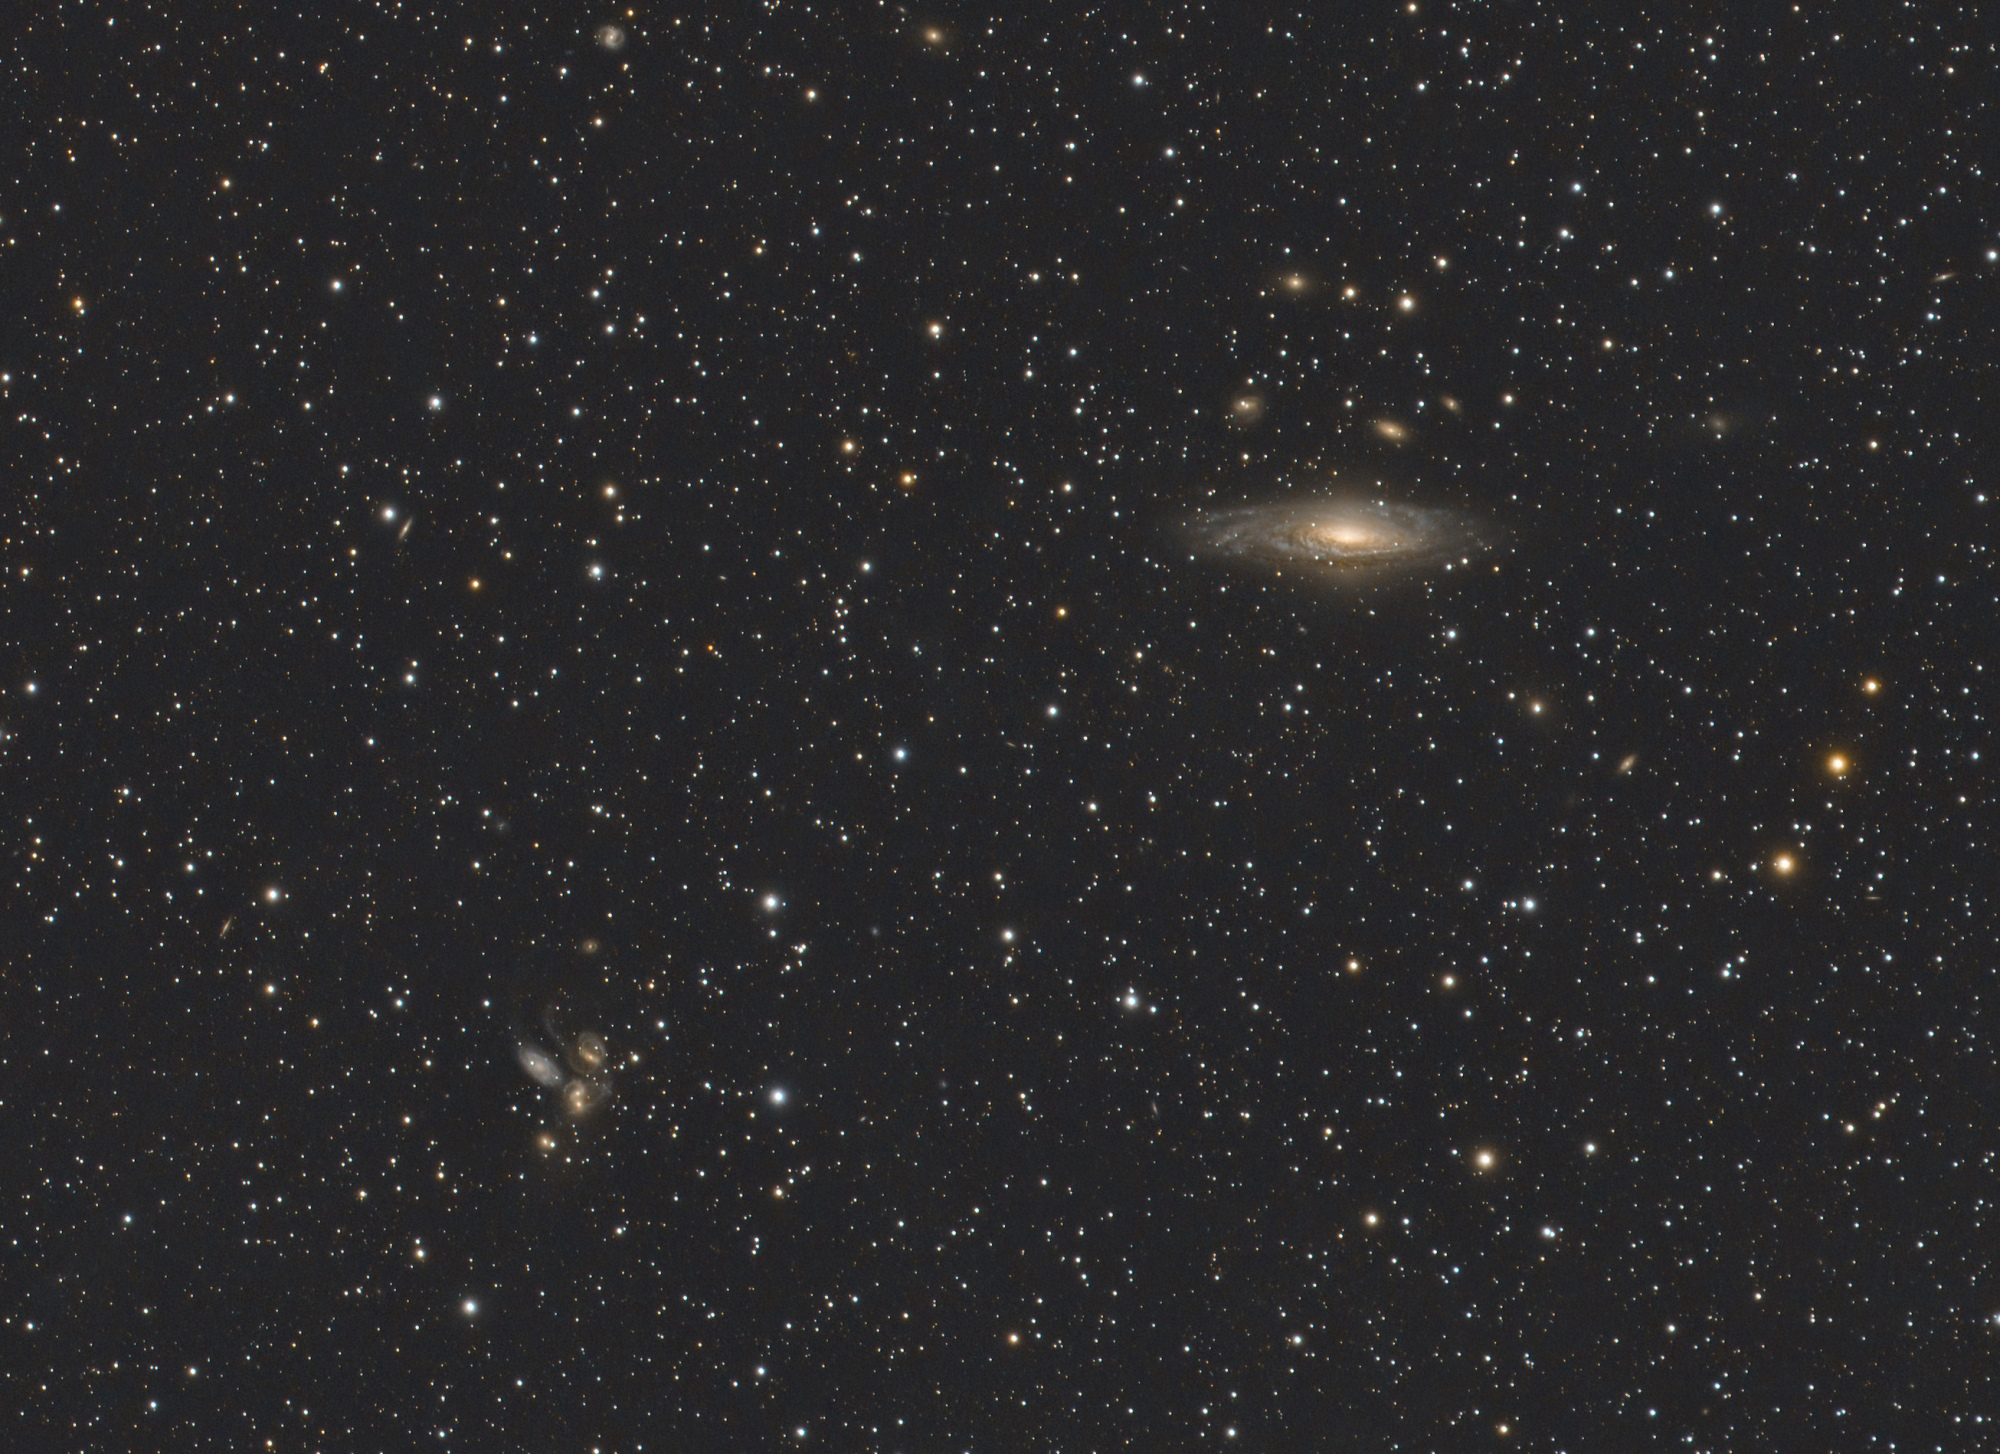 NGC7331-Drôme-foyer-61x180sec-Recadr2.jpg